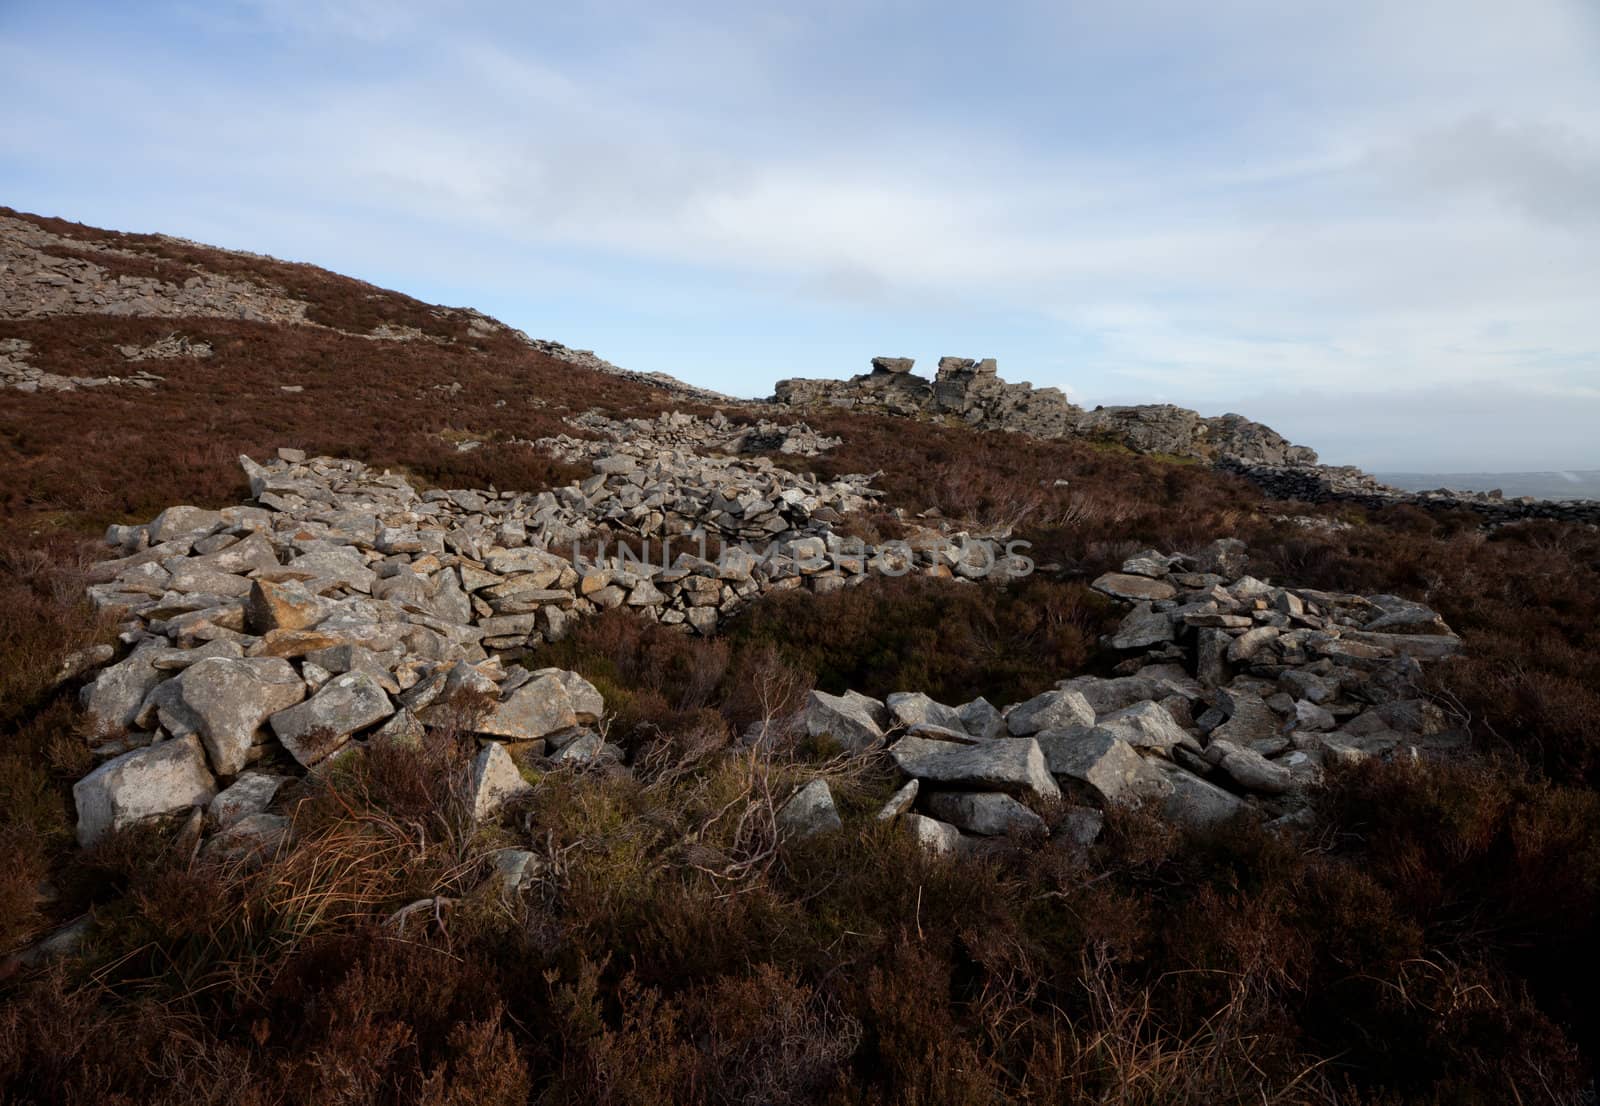 The remains of an iron age building at Tre'r Ceiri hill fort, Yr Eifl, Gwynedd Wales Uk, amongst heather on a hill.